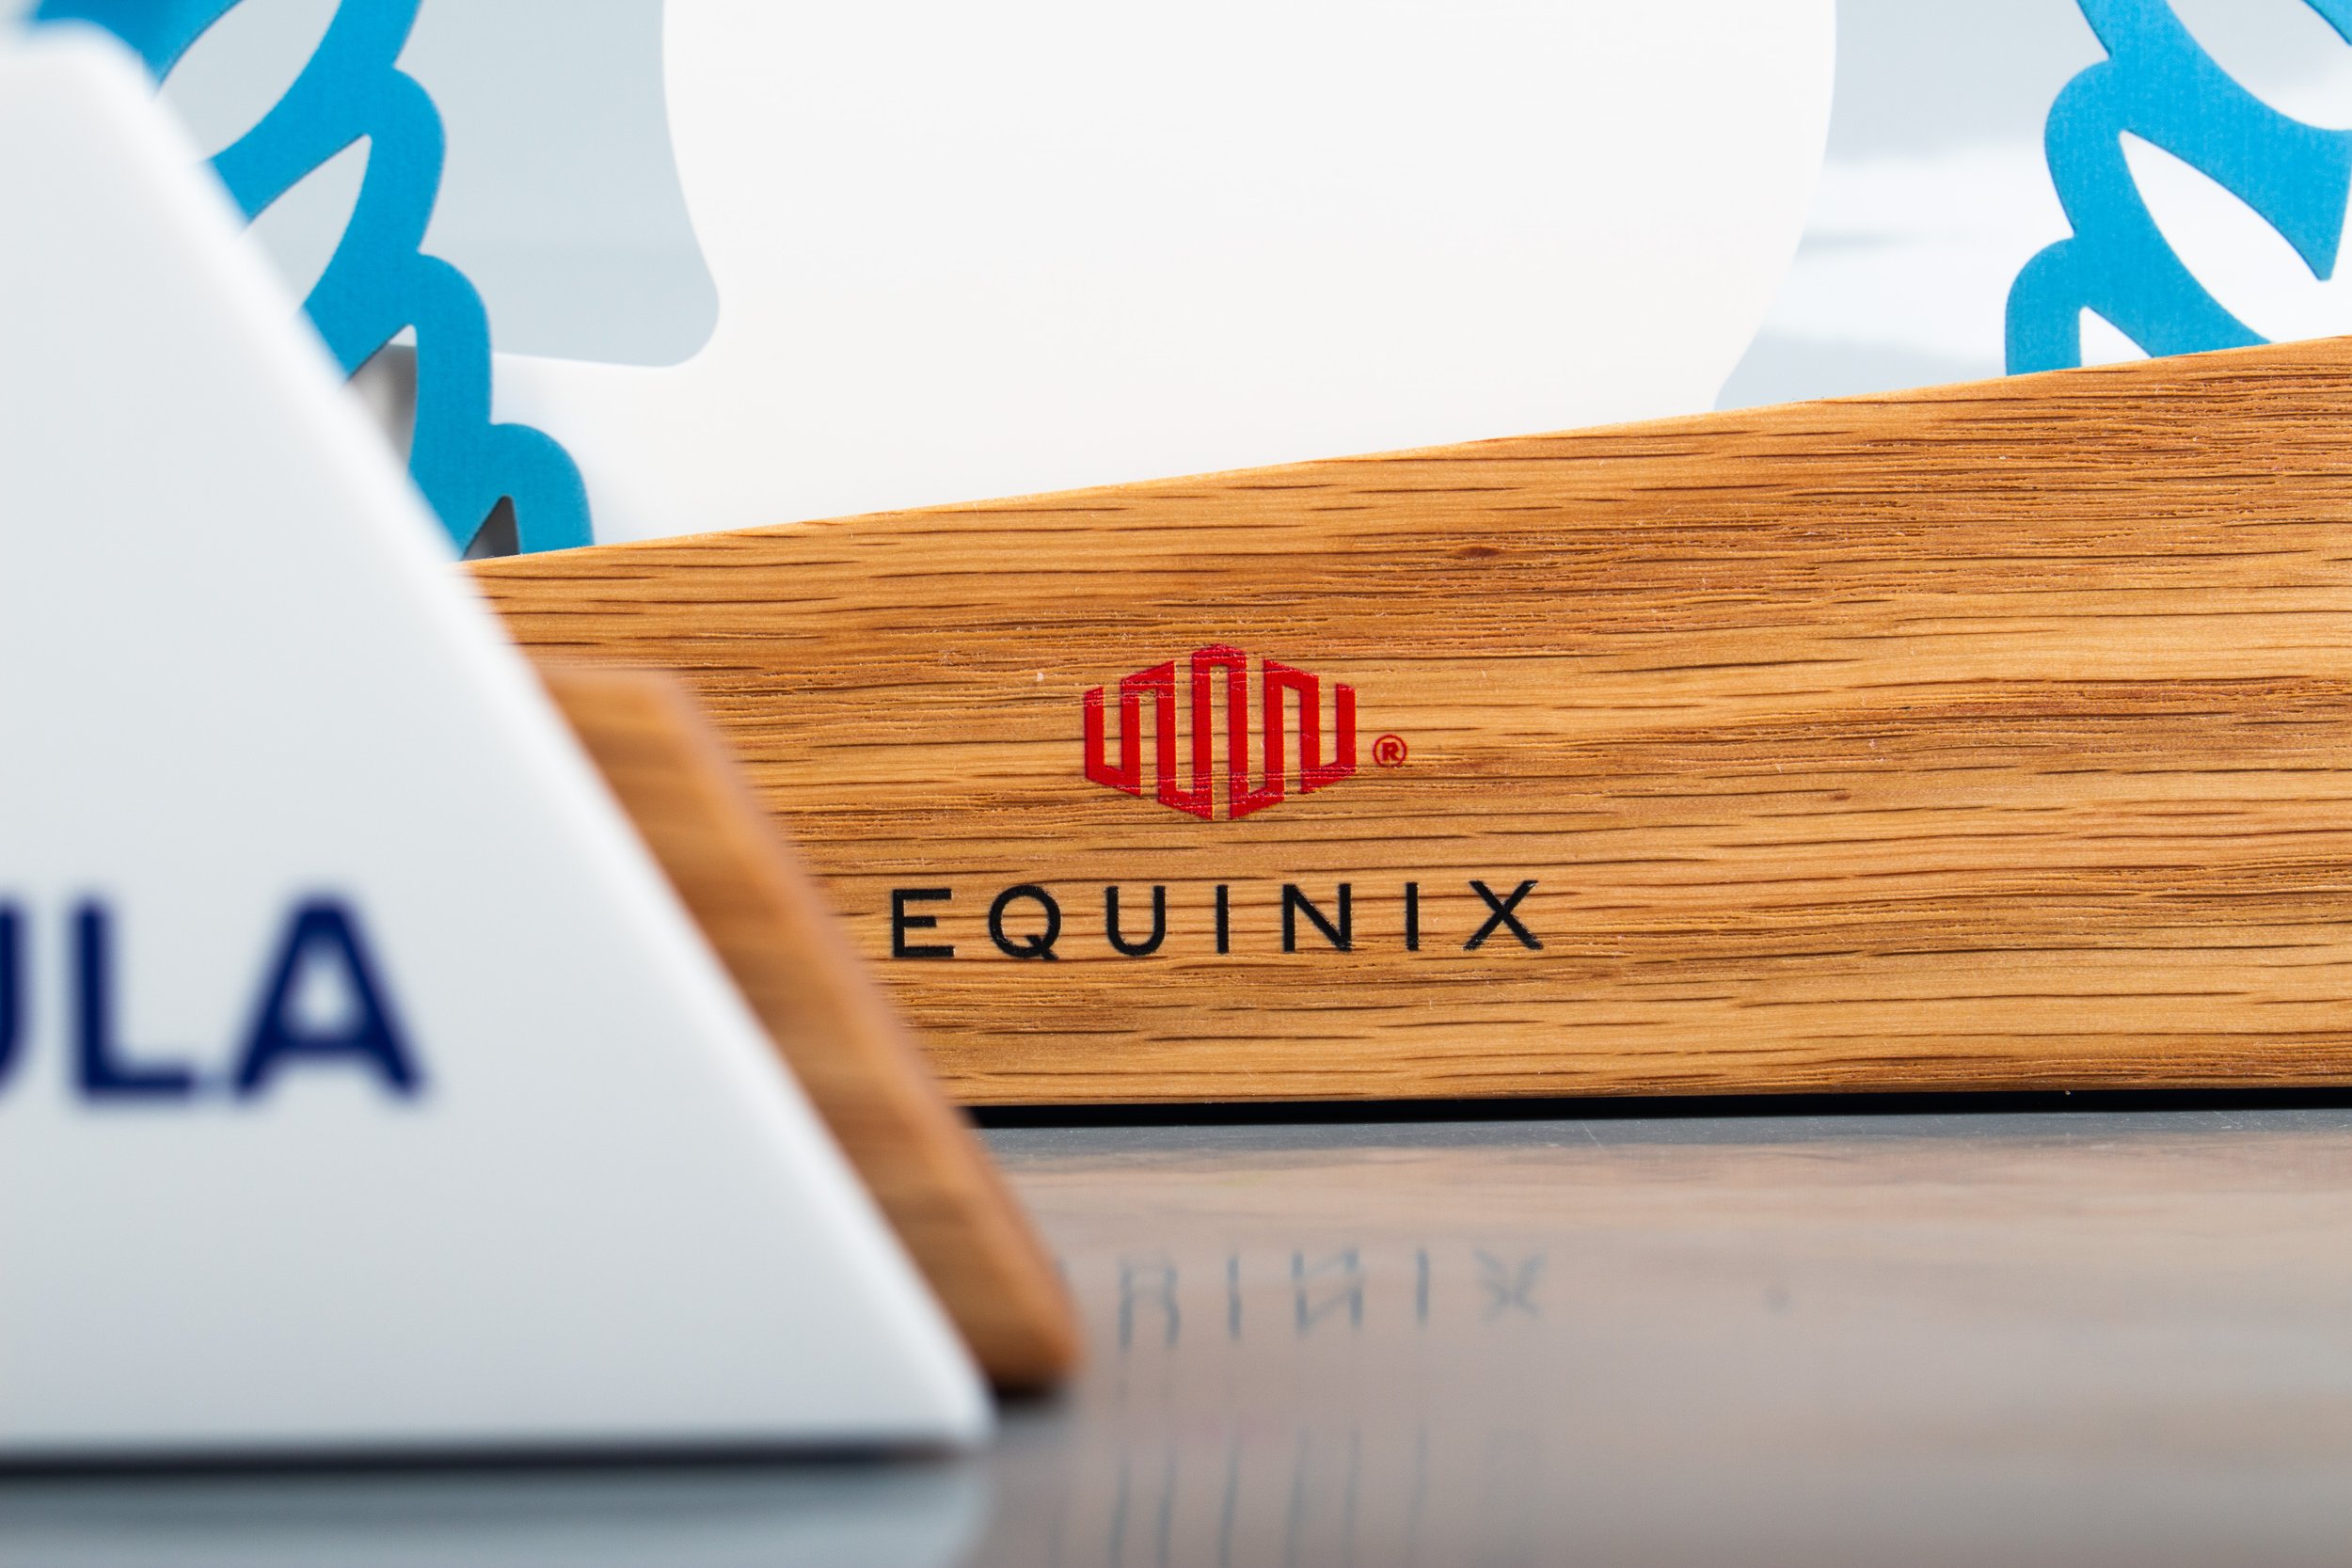 Equinix custom awards - oak wood and brand logo 